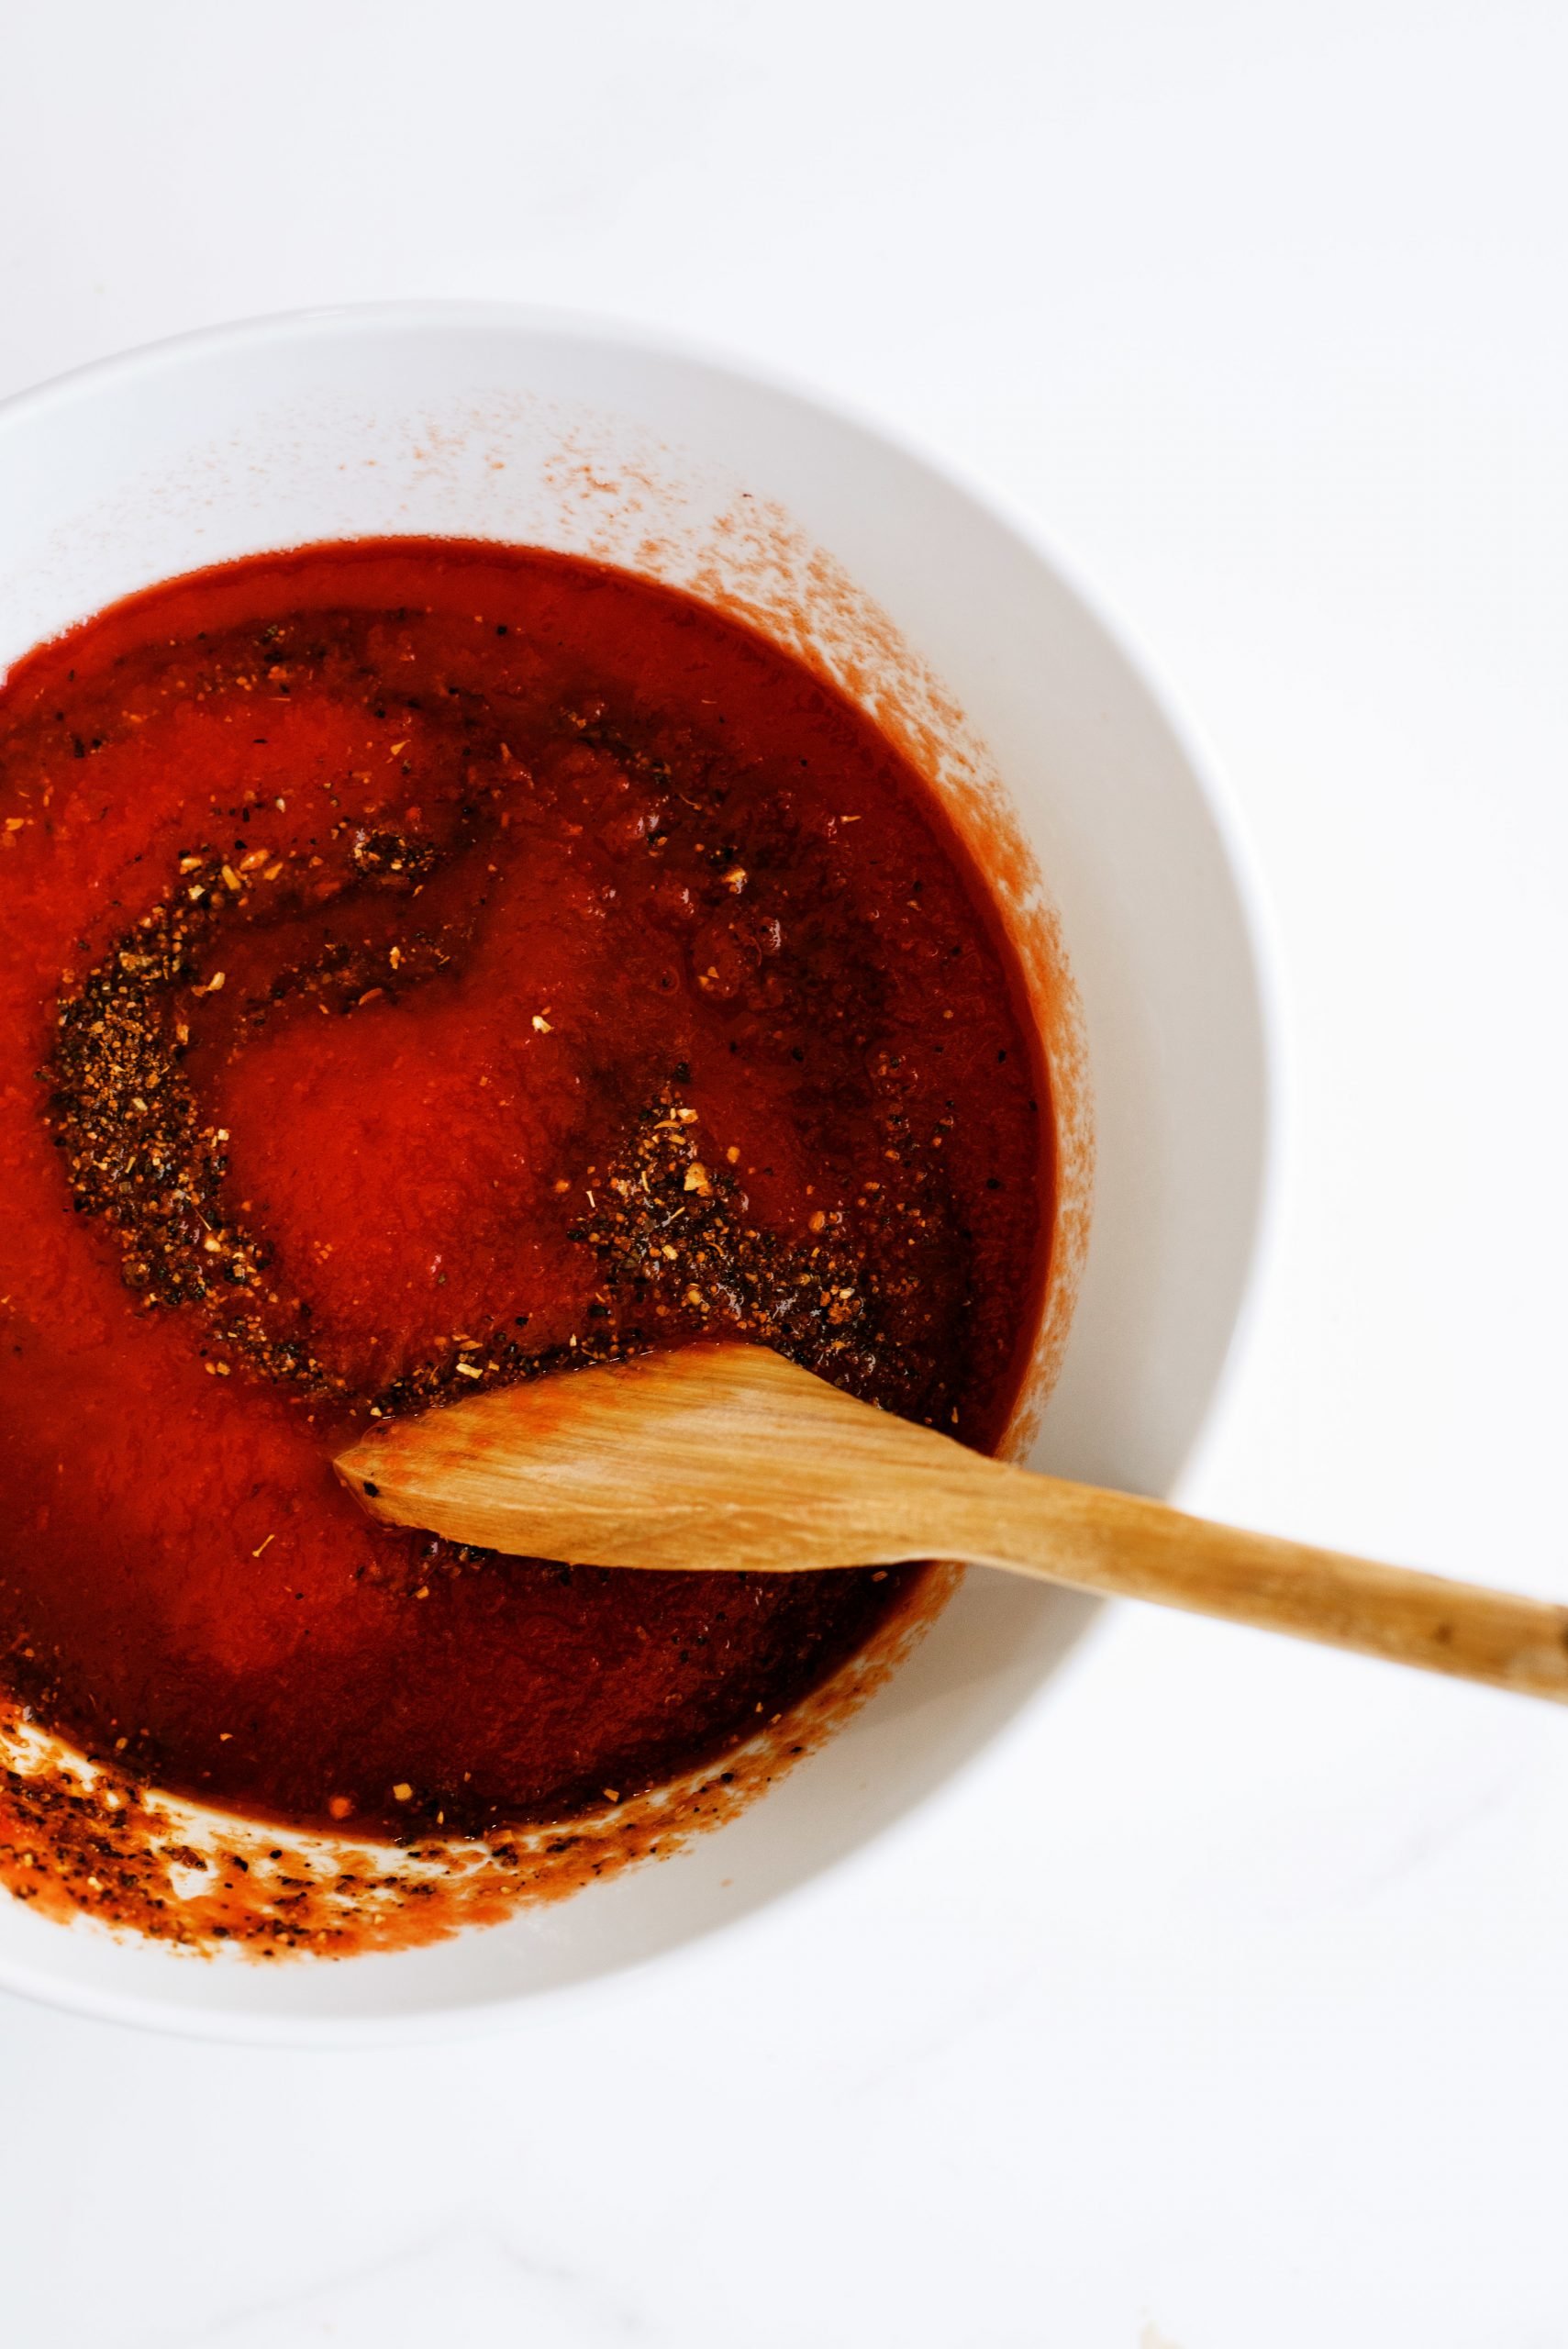 Medium mixing bowl with sauce ingredients